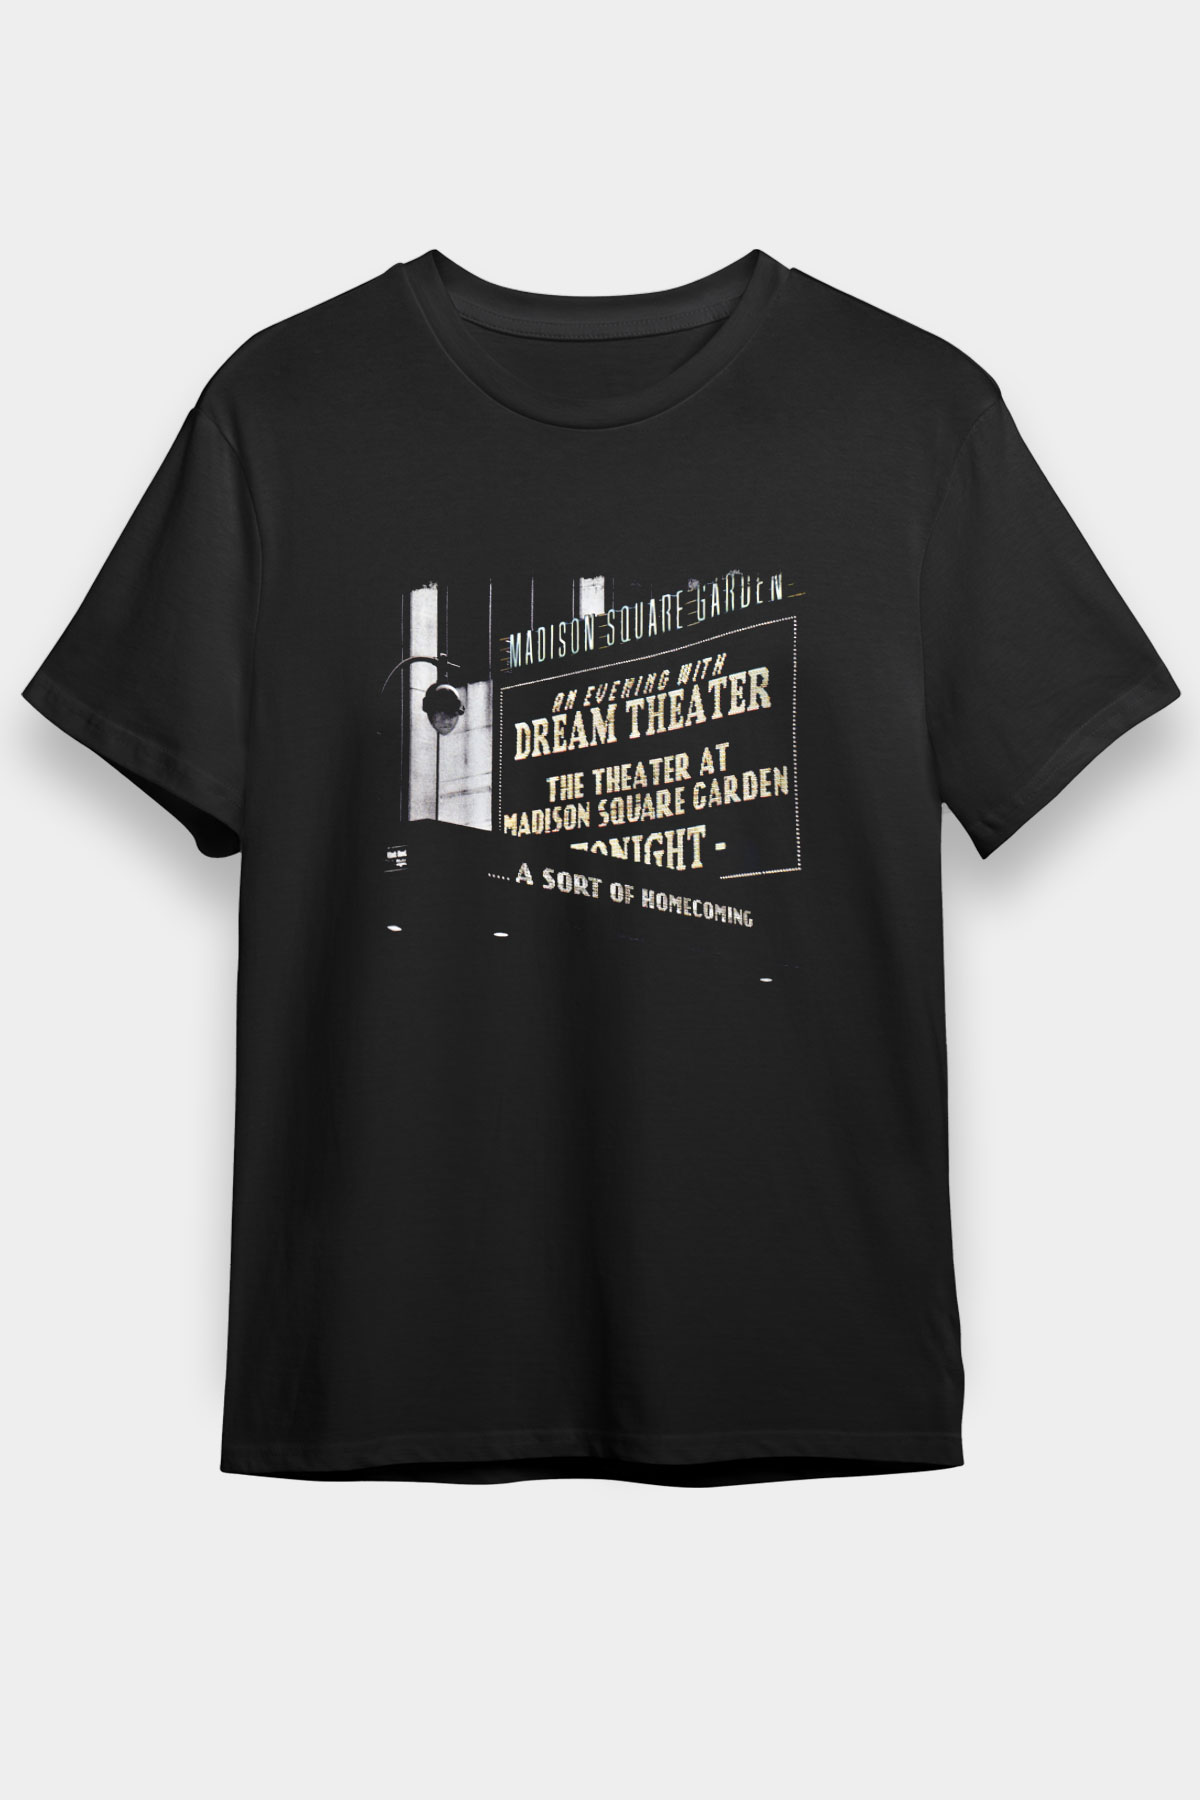 Dream Theater T shirt,Music Band,Unisex Tshirt 20/